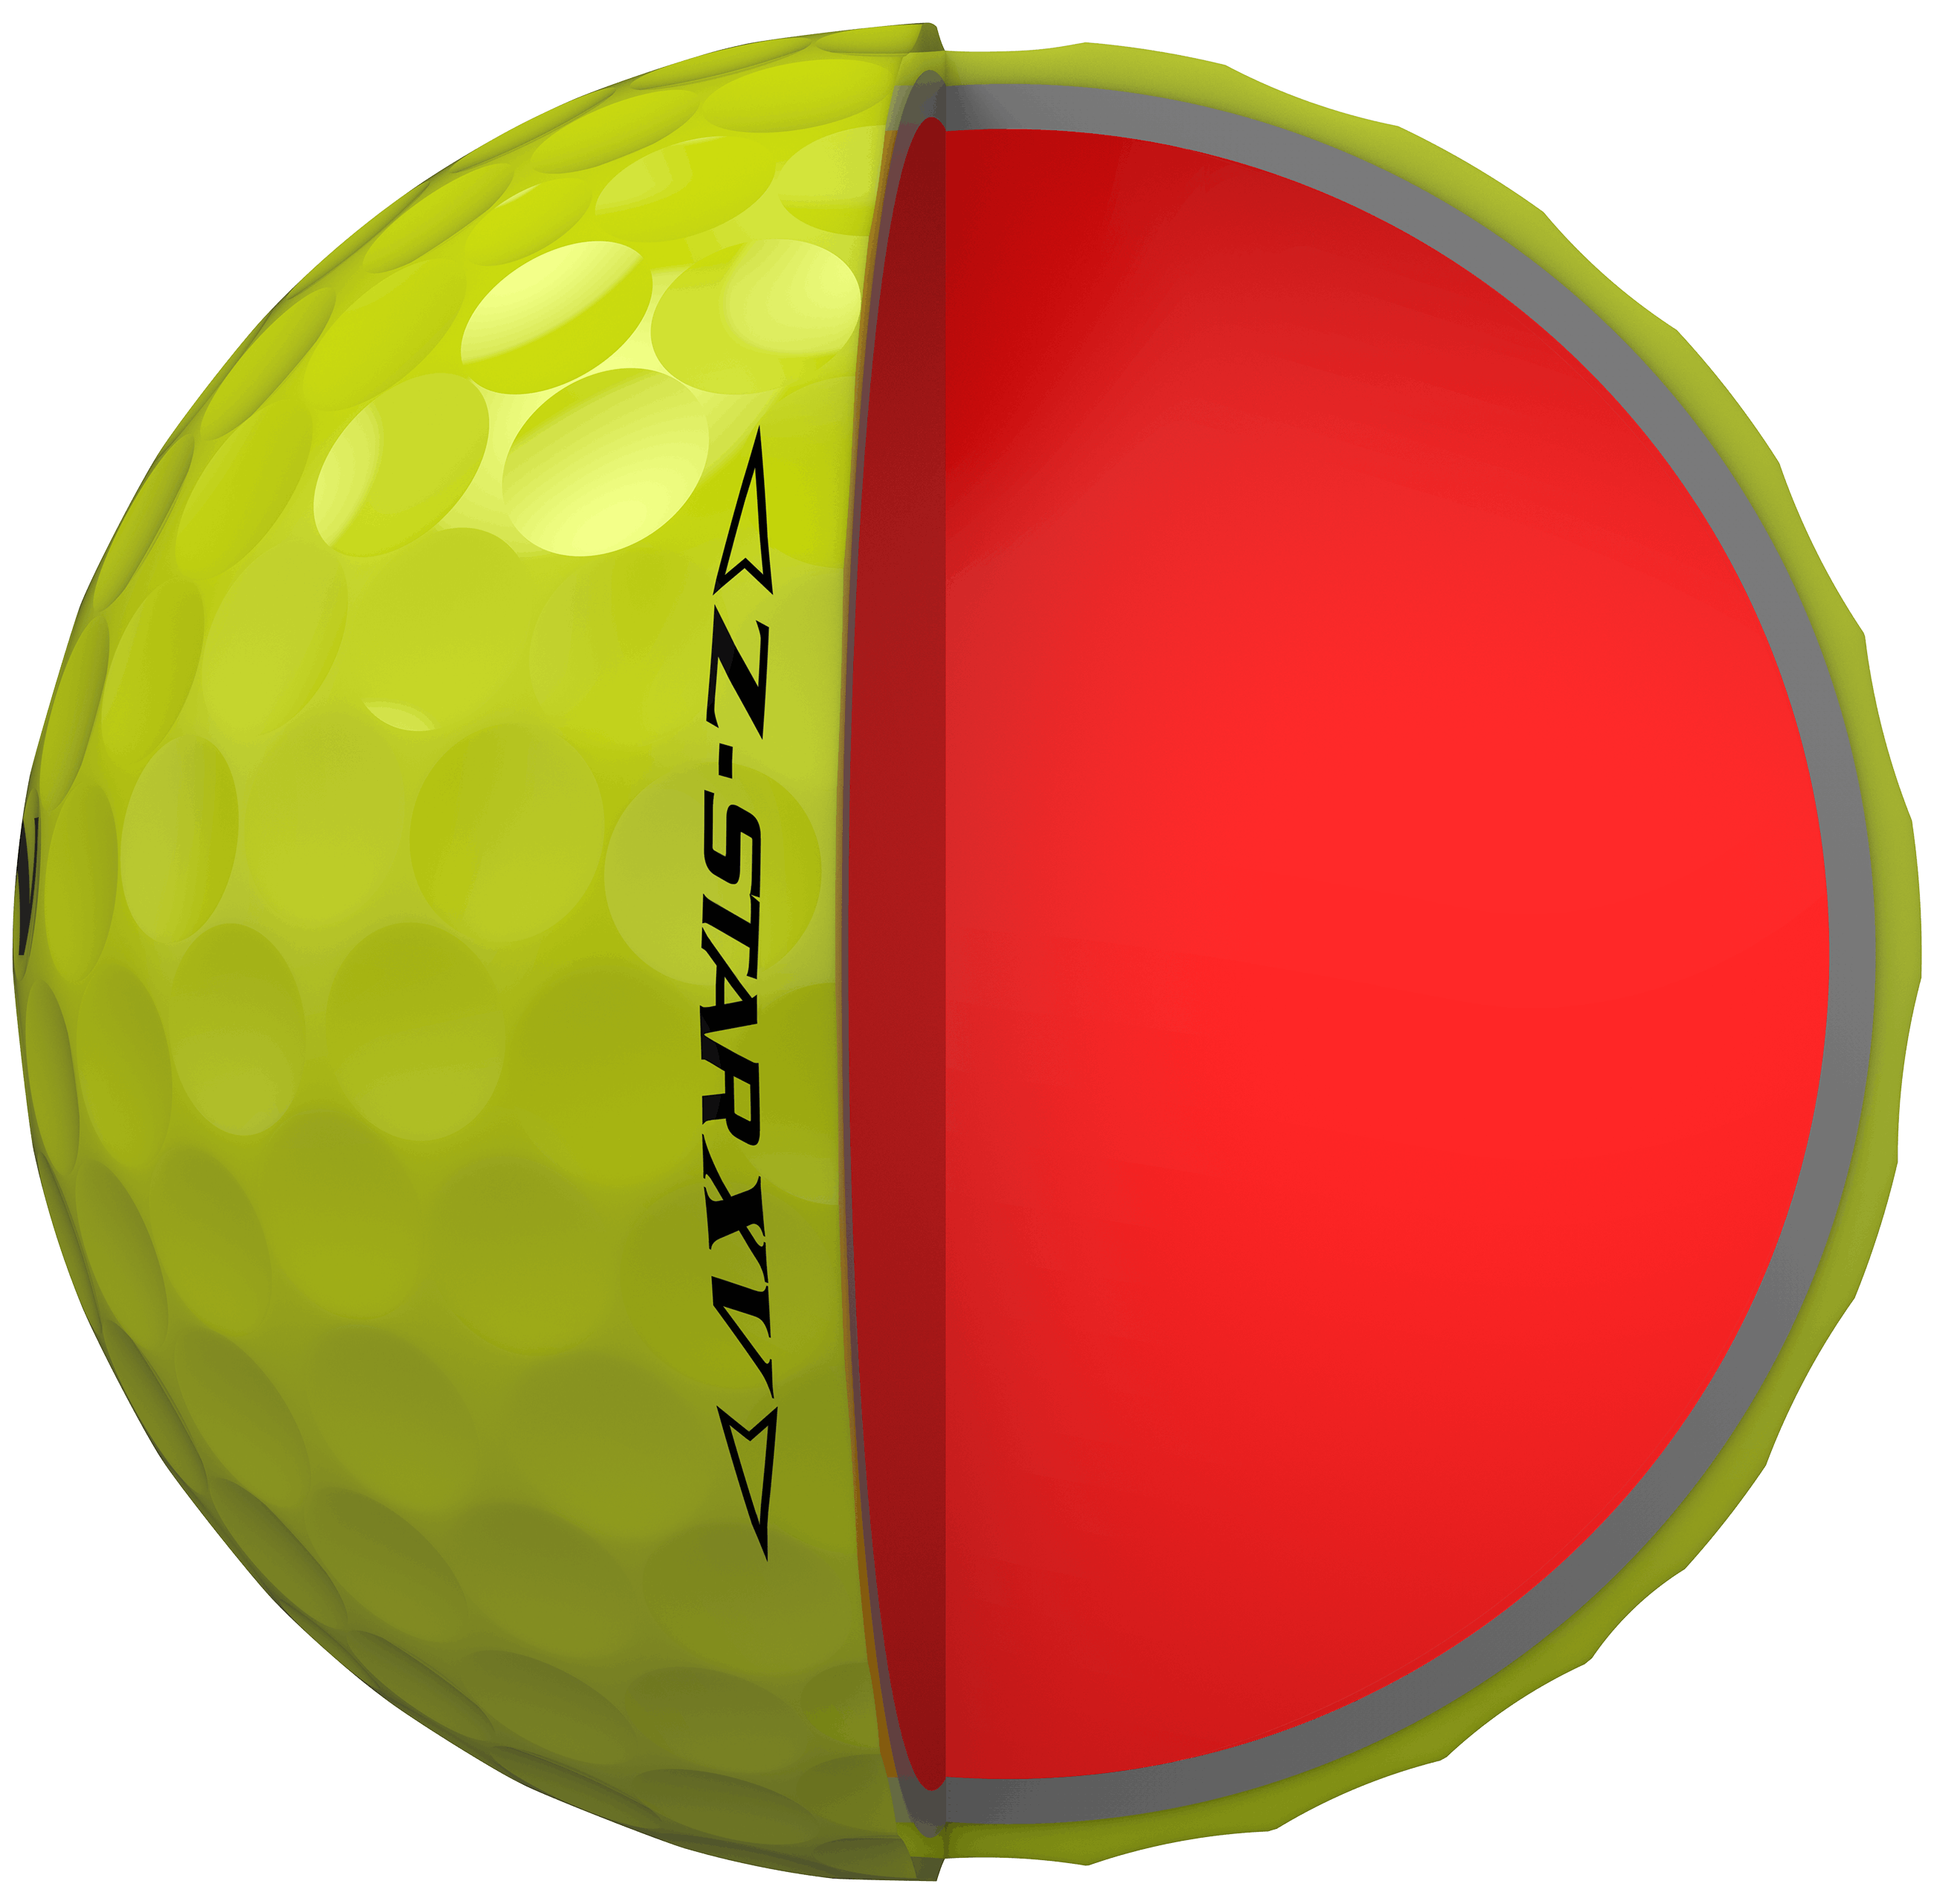 Srixon Z-Star XV8 Golf Ball · Tour Yellow